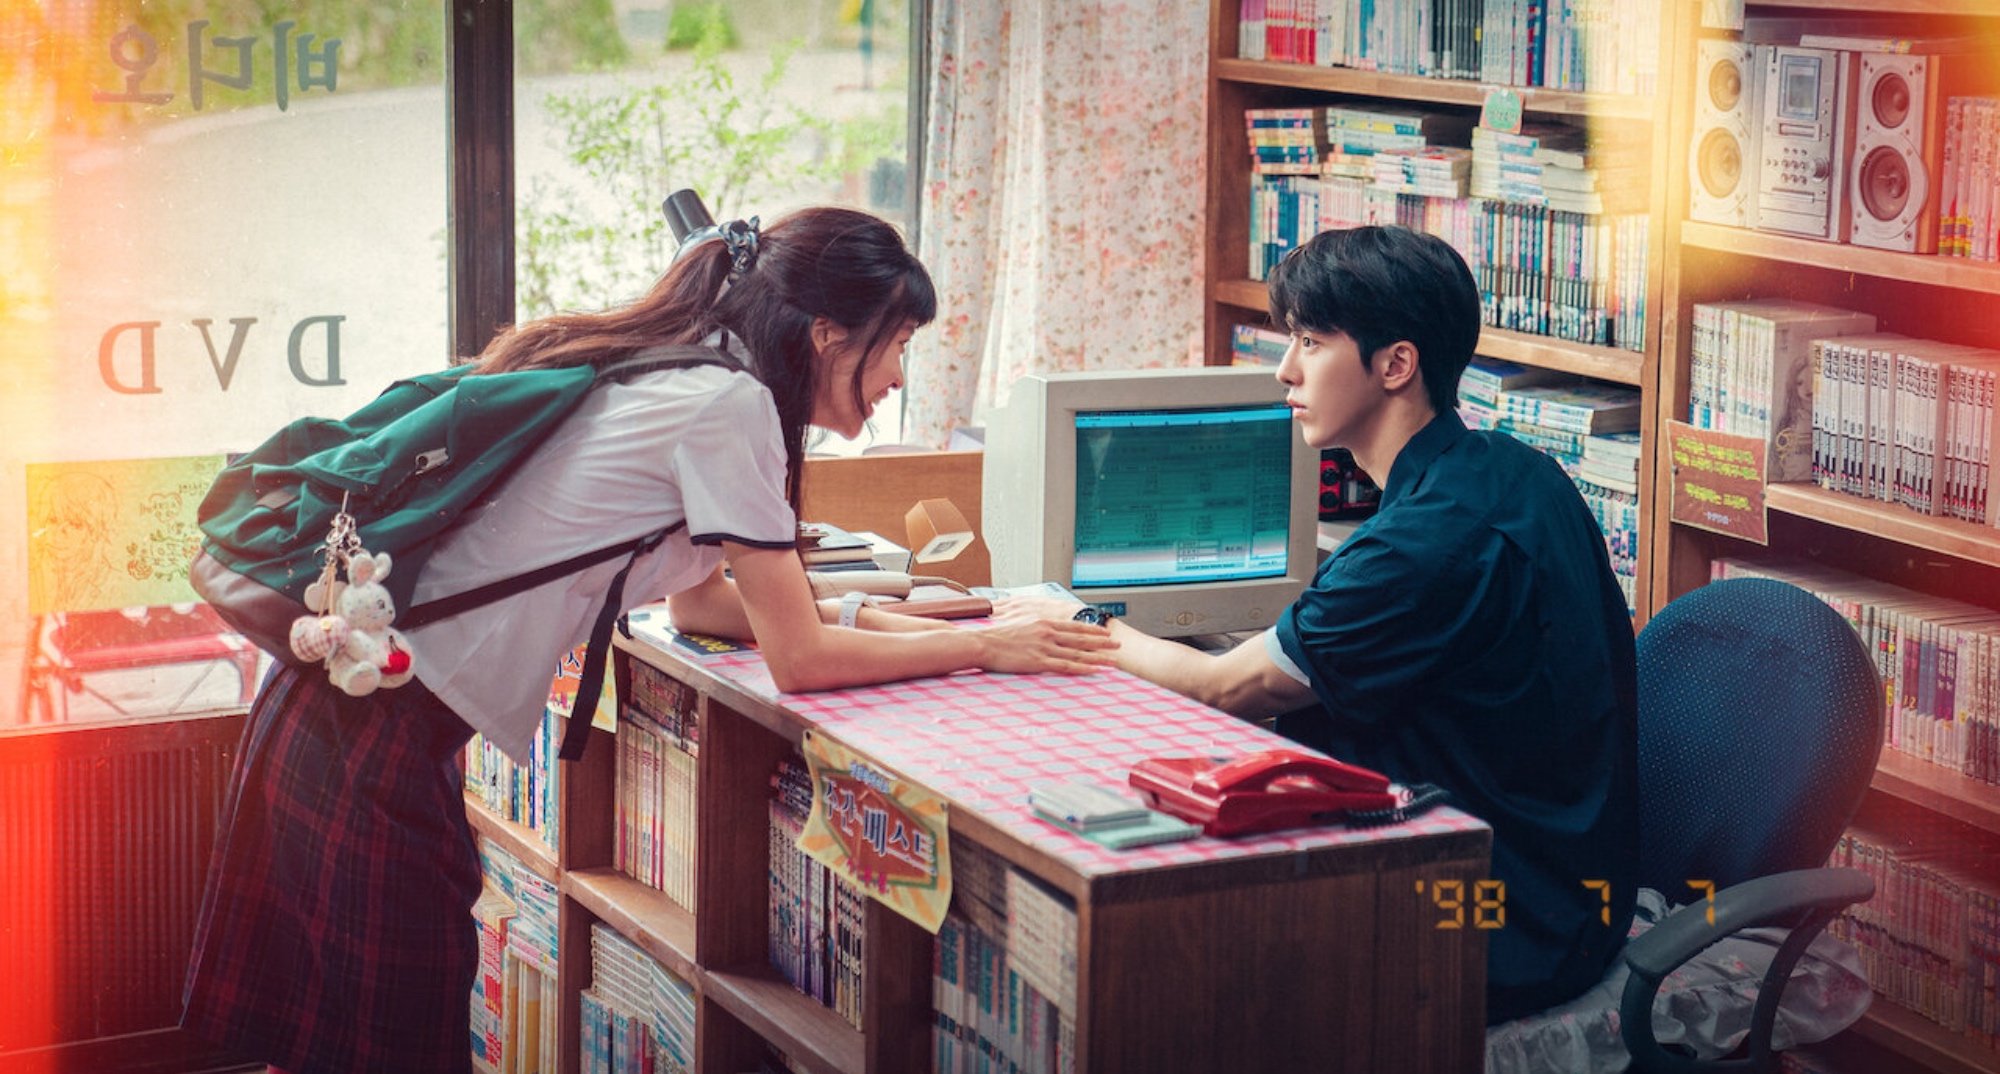 Characters Hee-do and Yi-jin in 'Twenty-Five Twenty-One' age-gap relationship in comic book shop.